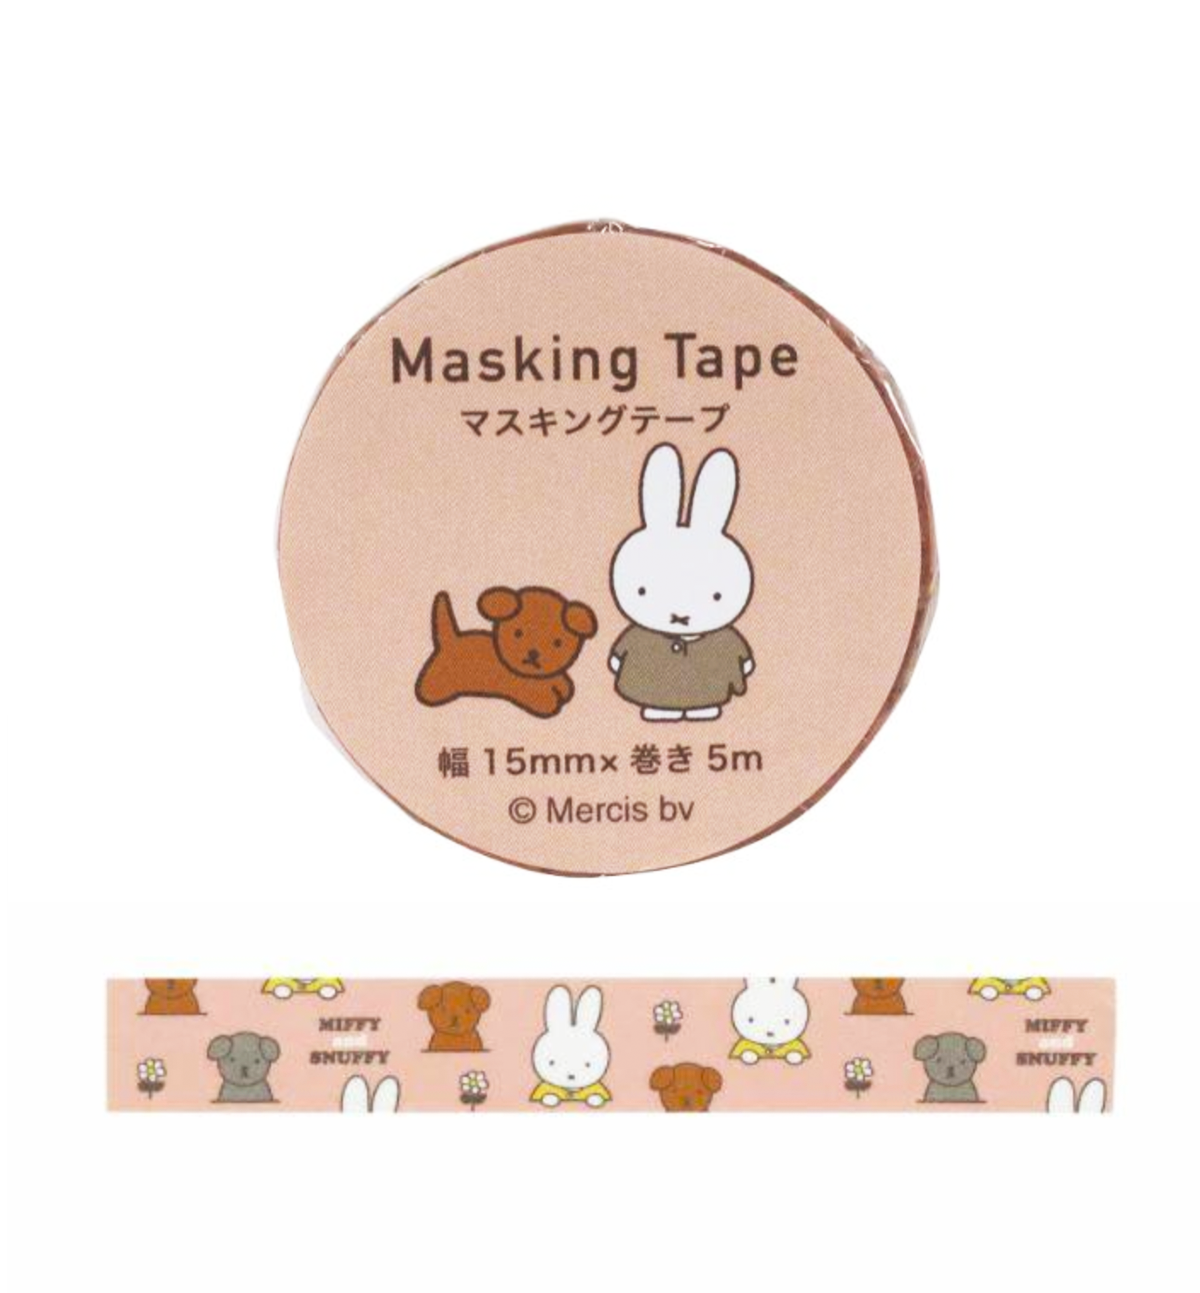 Miffy & Snuffy Washi Tape